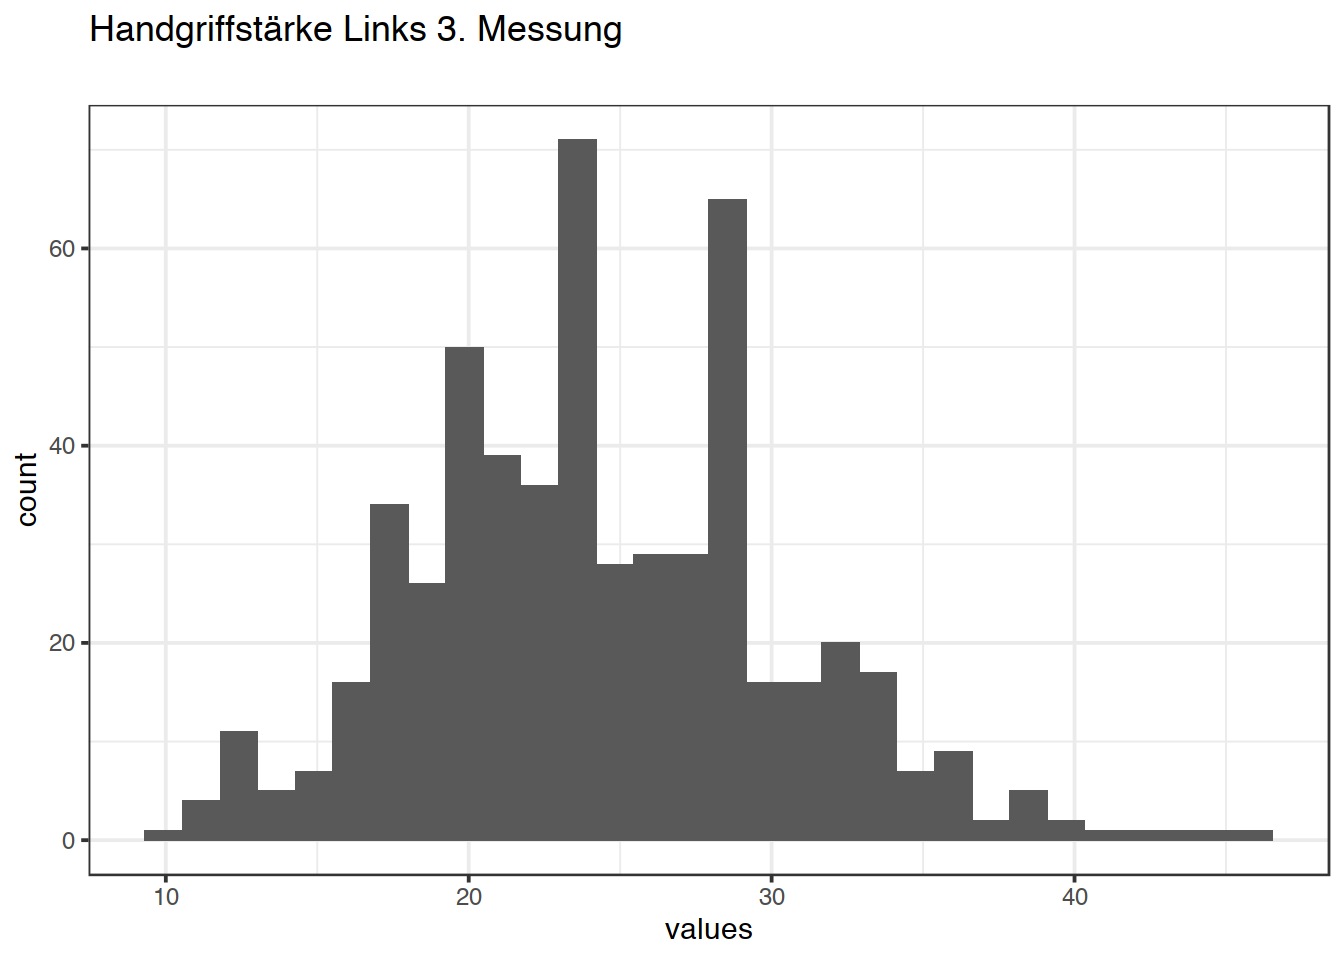 Distribution of values for Handgriffstärke Links 3. Messung